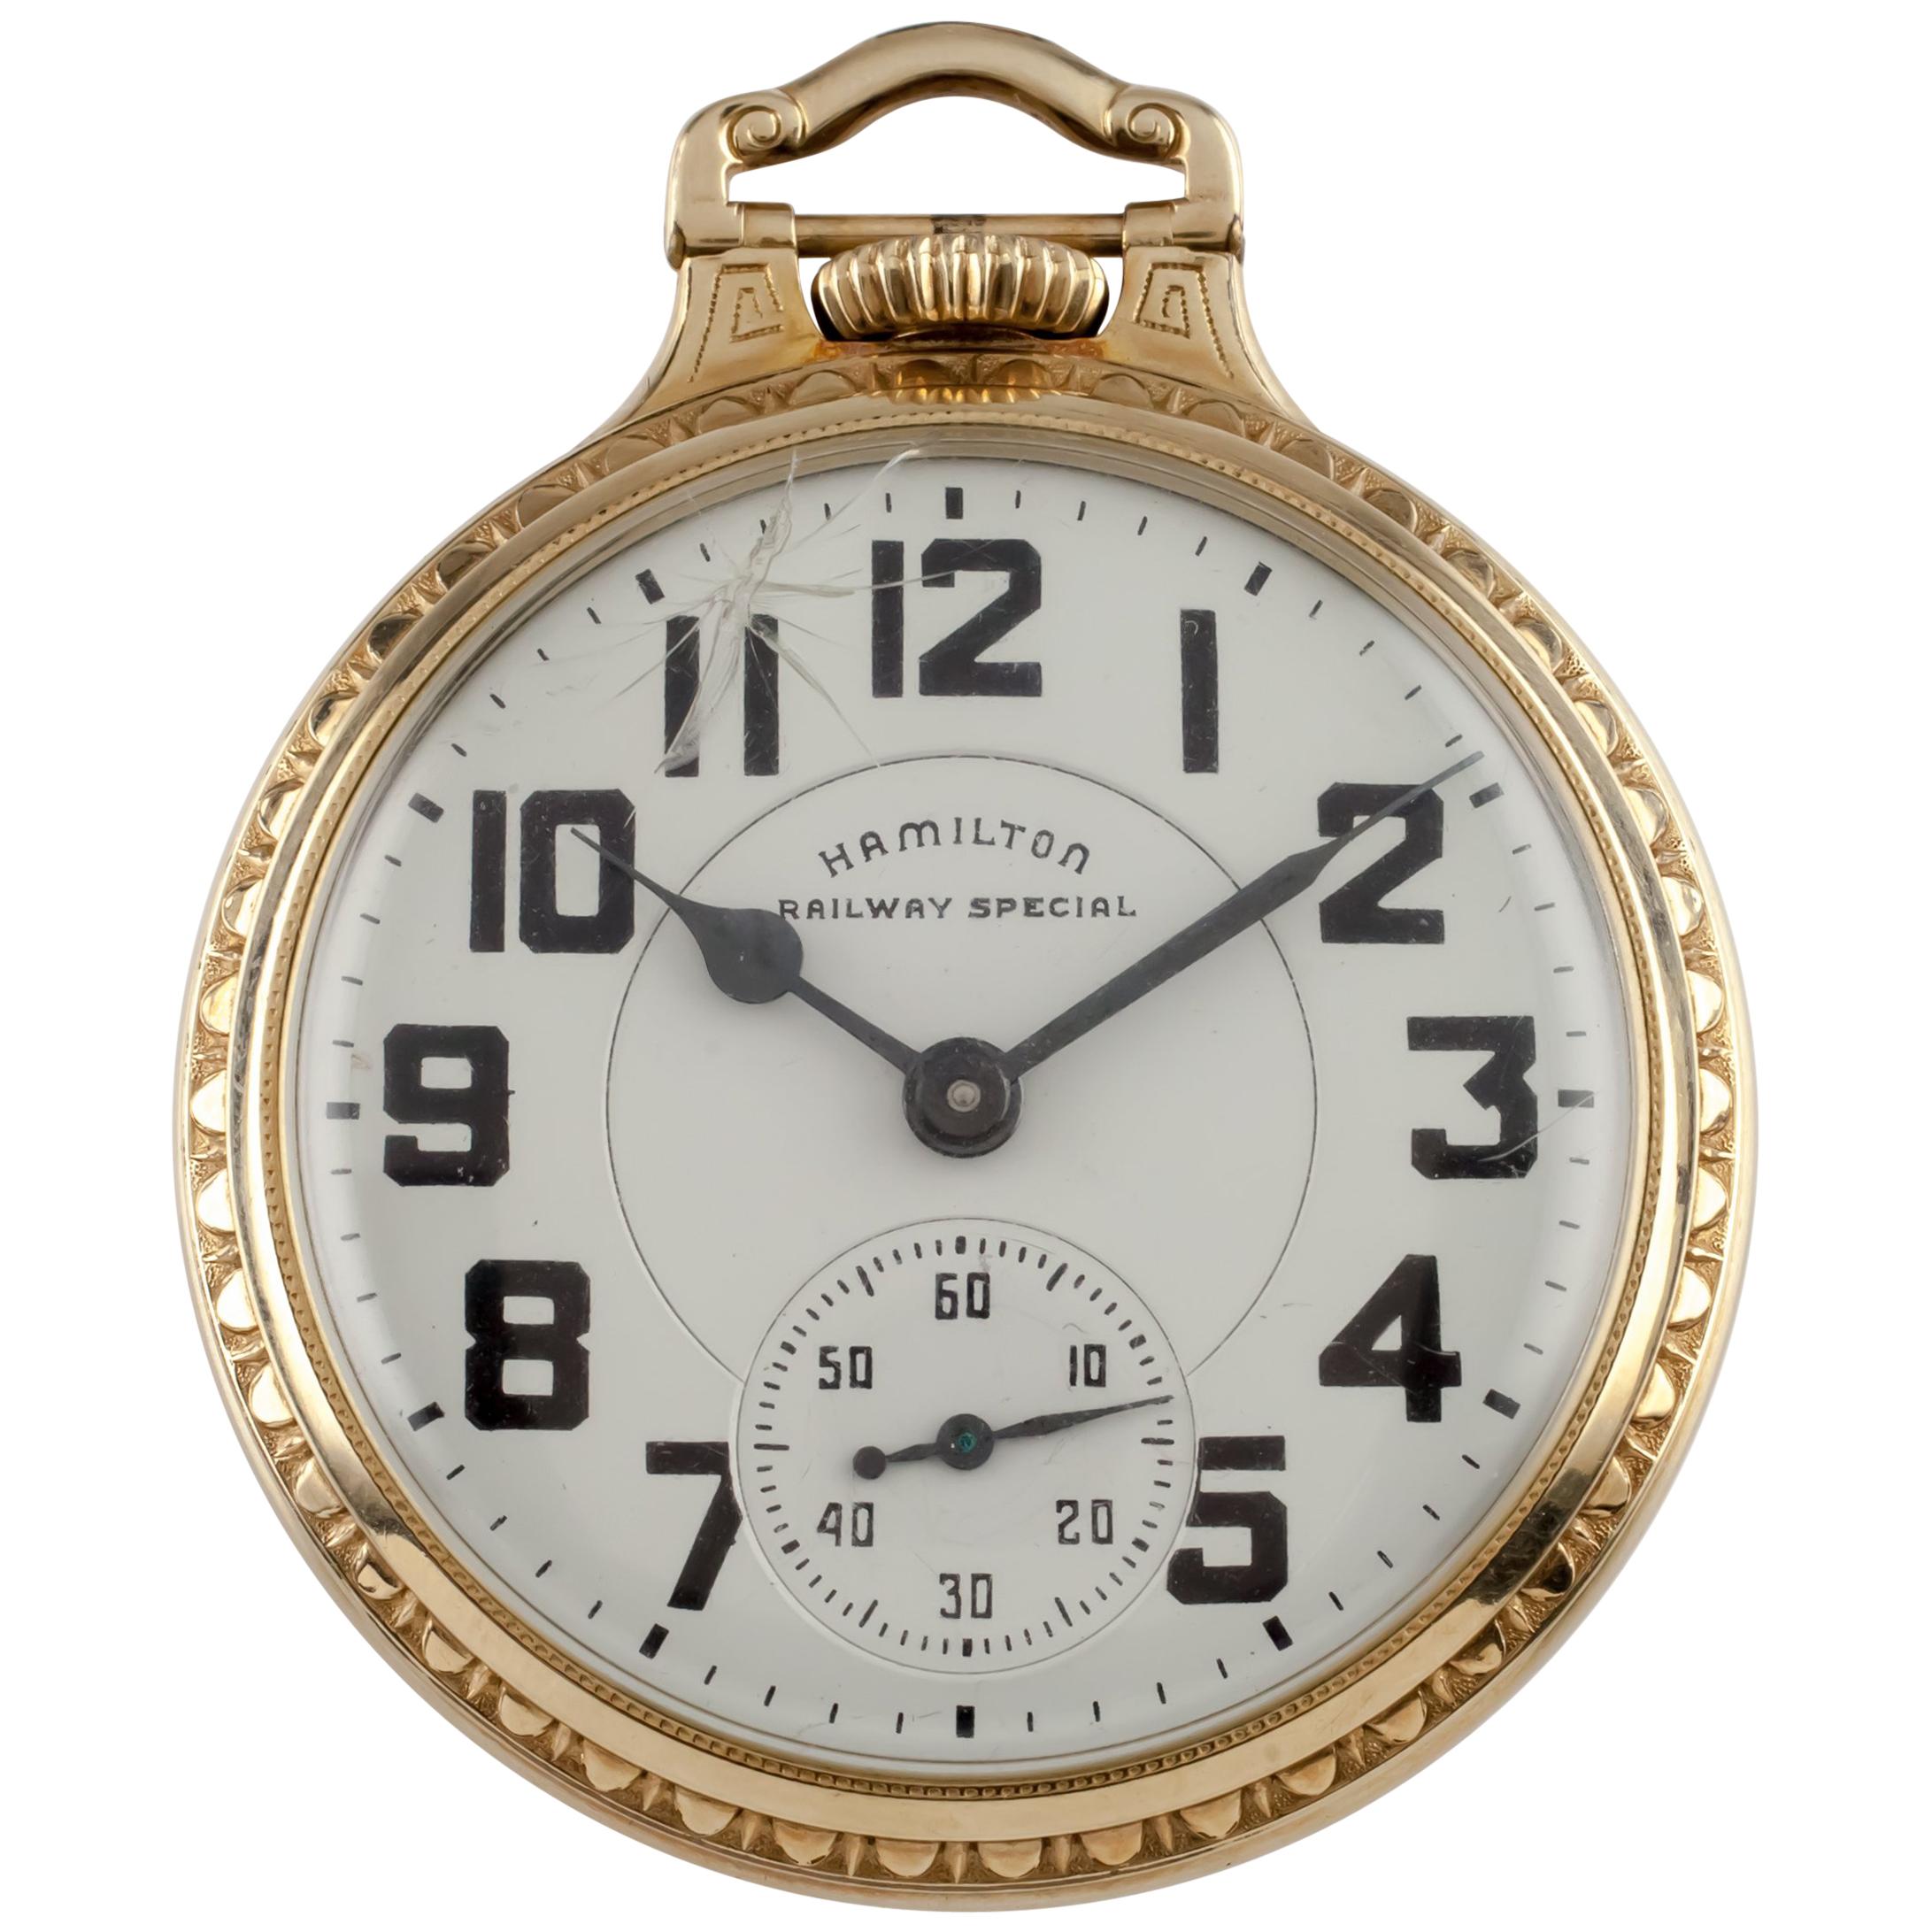 Hamilton Railway Special Gr 992B Open Face Gold Filled Pocket Watch 21 Jewel